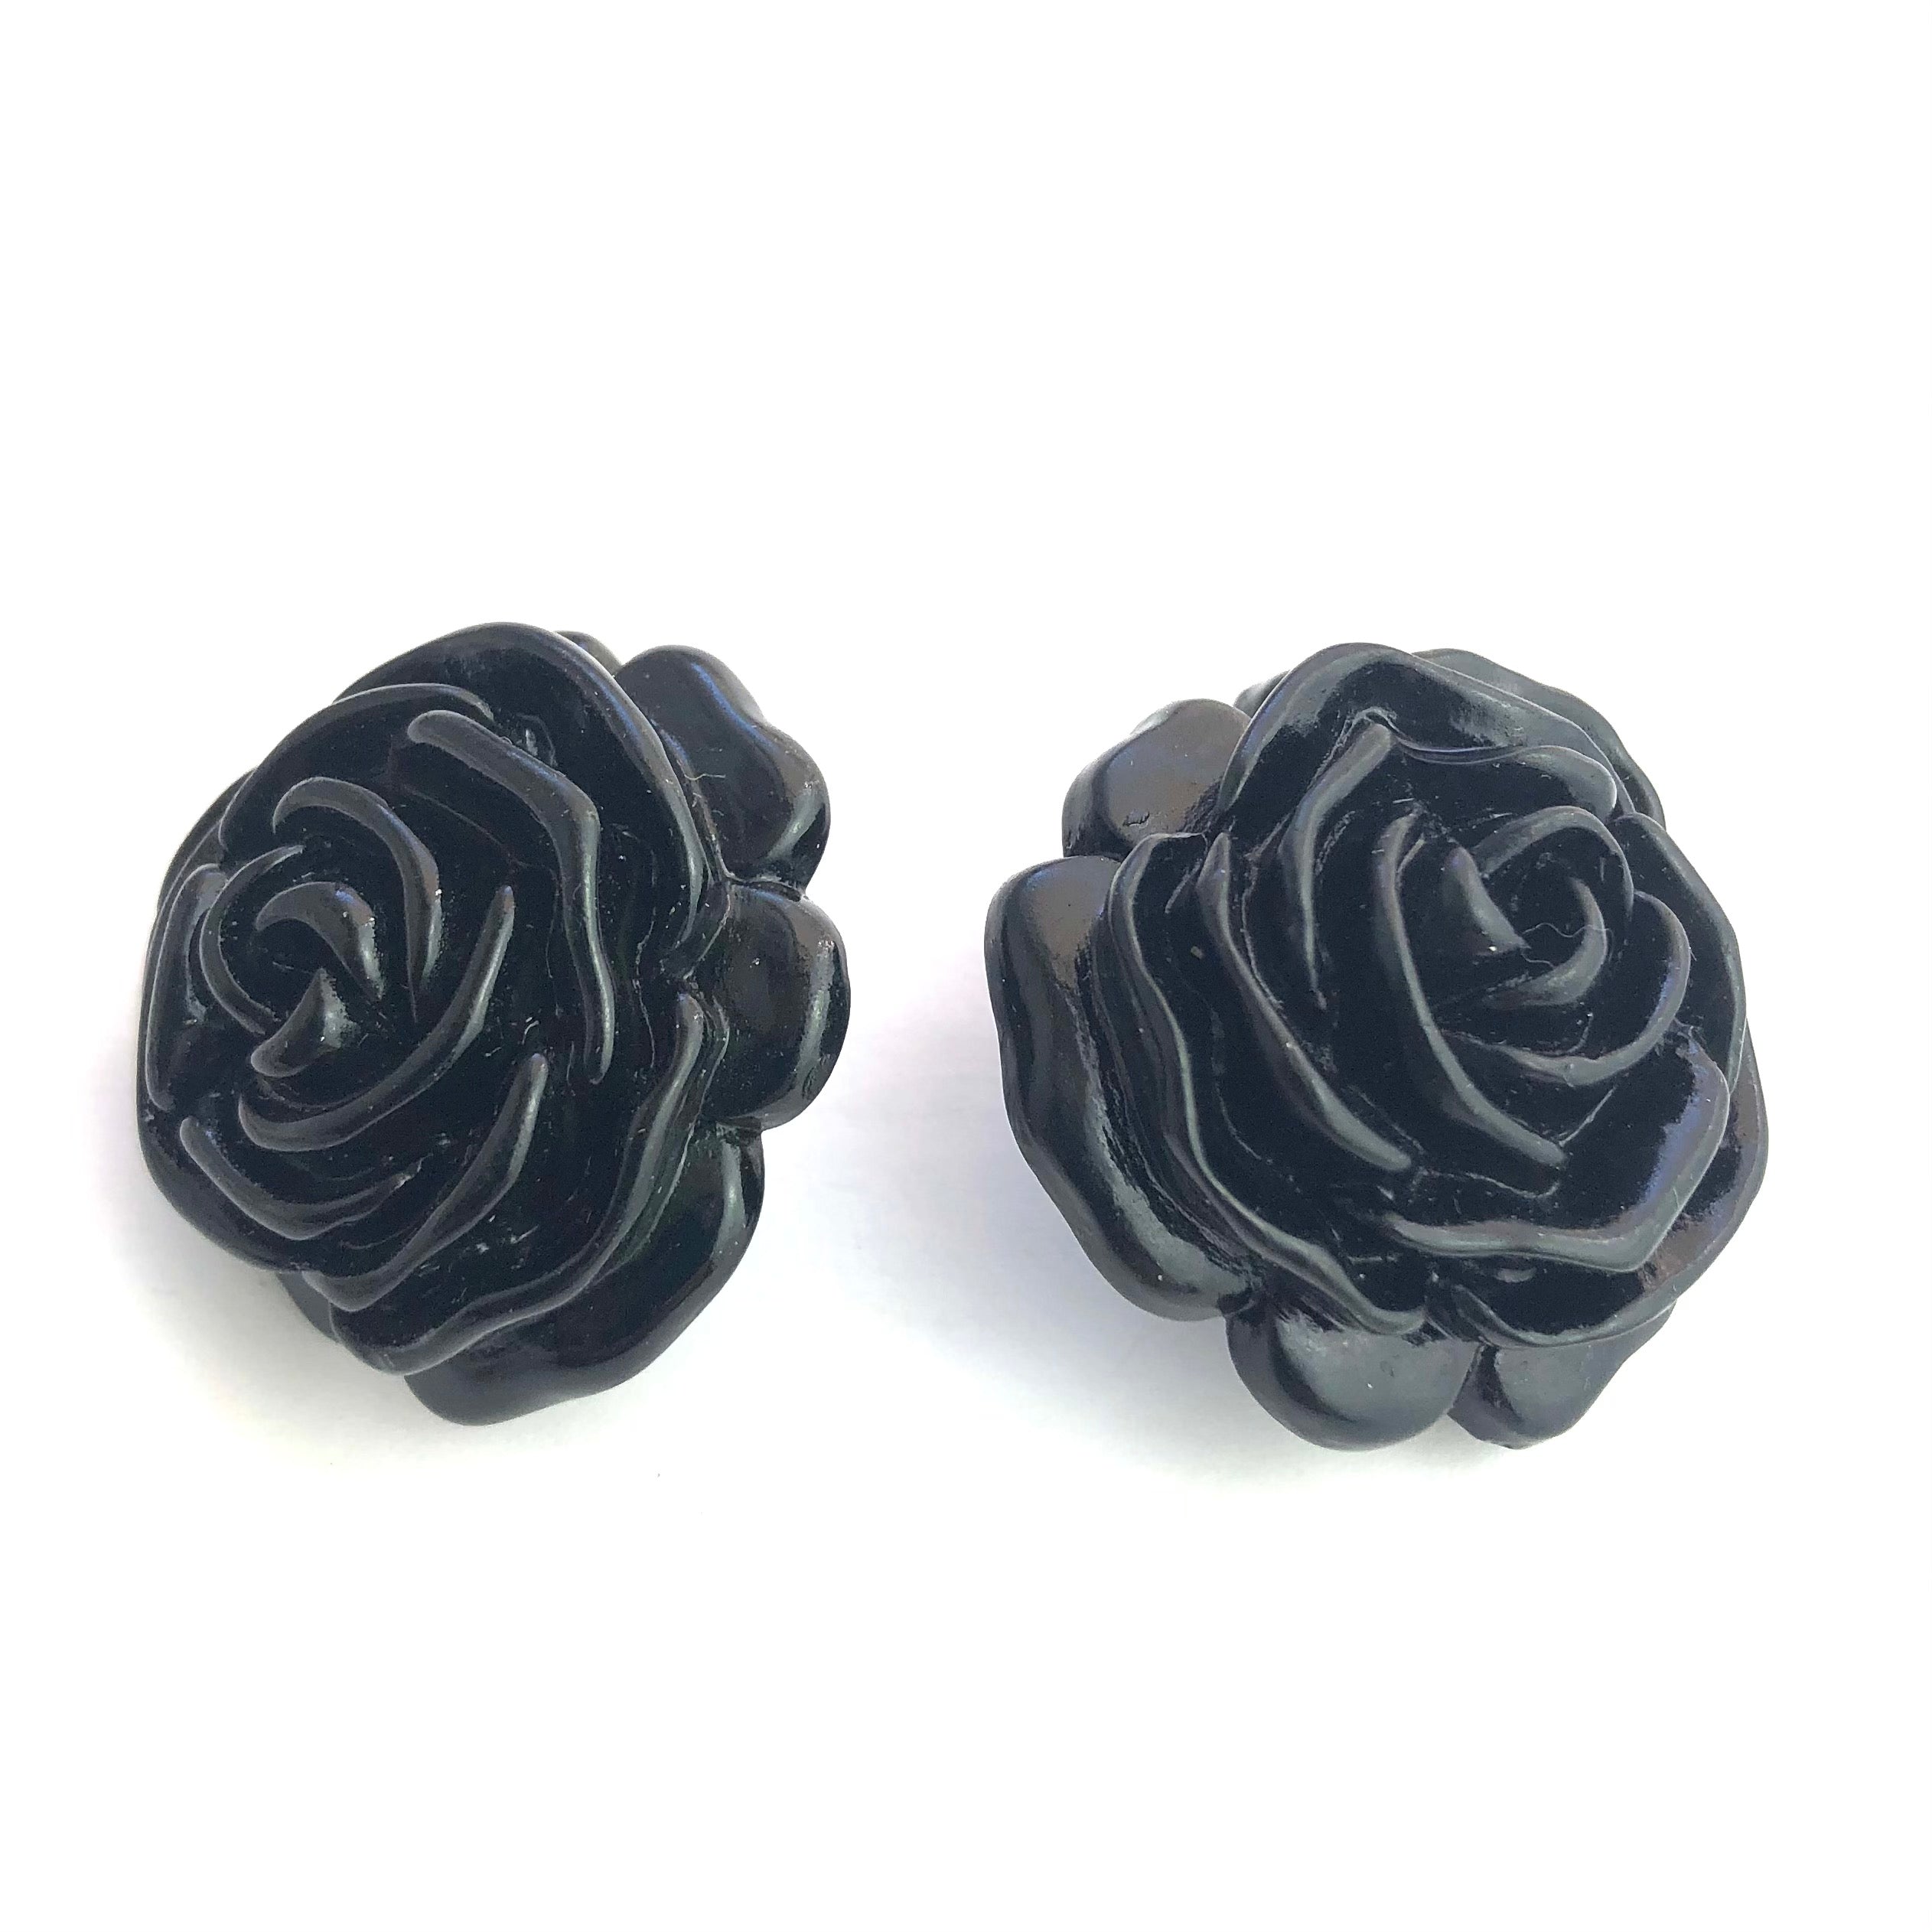 black flower earrings